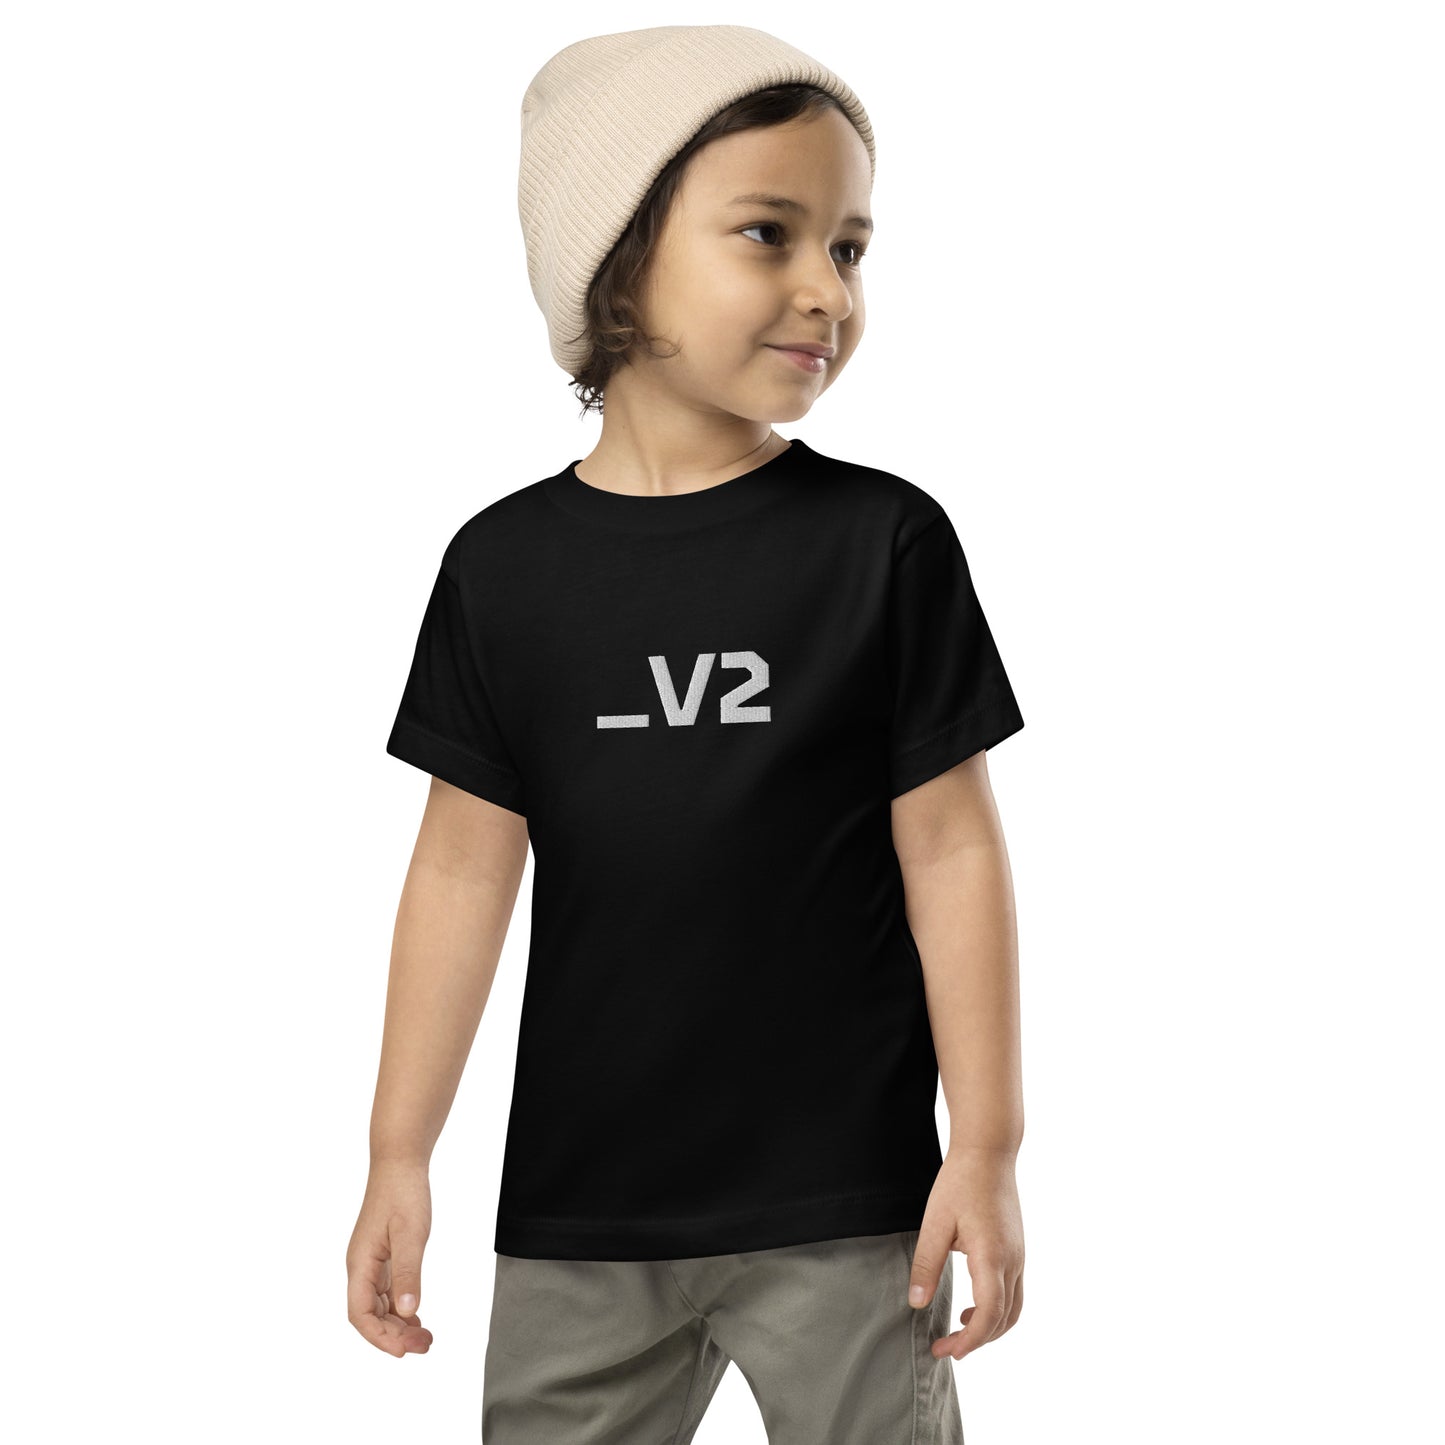 _V2 Embroidered Toddler Short Sleeve Tee